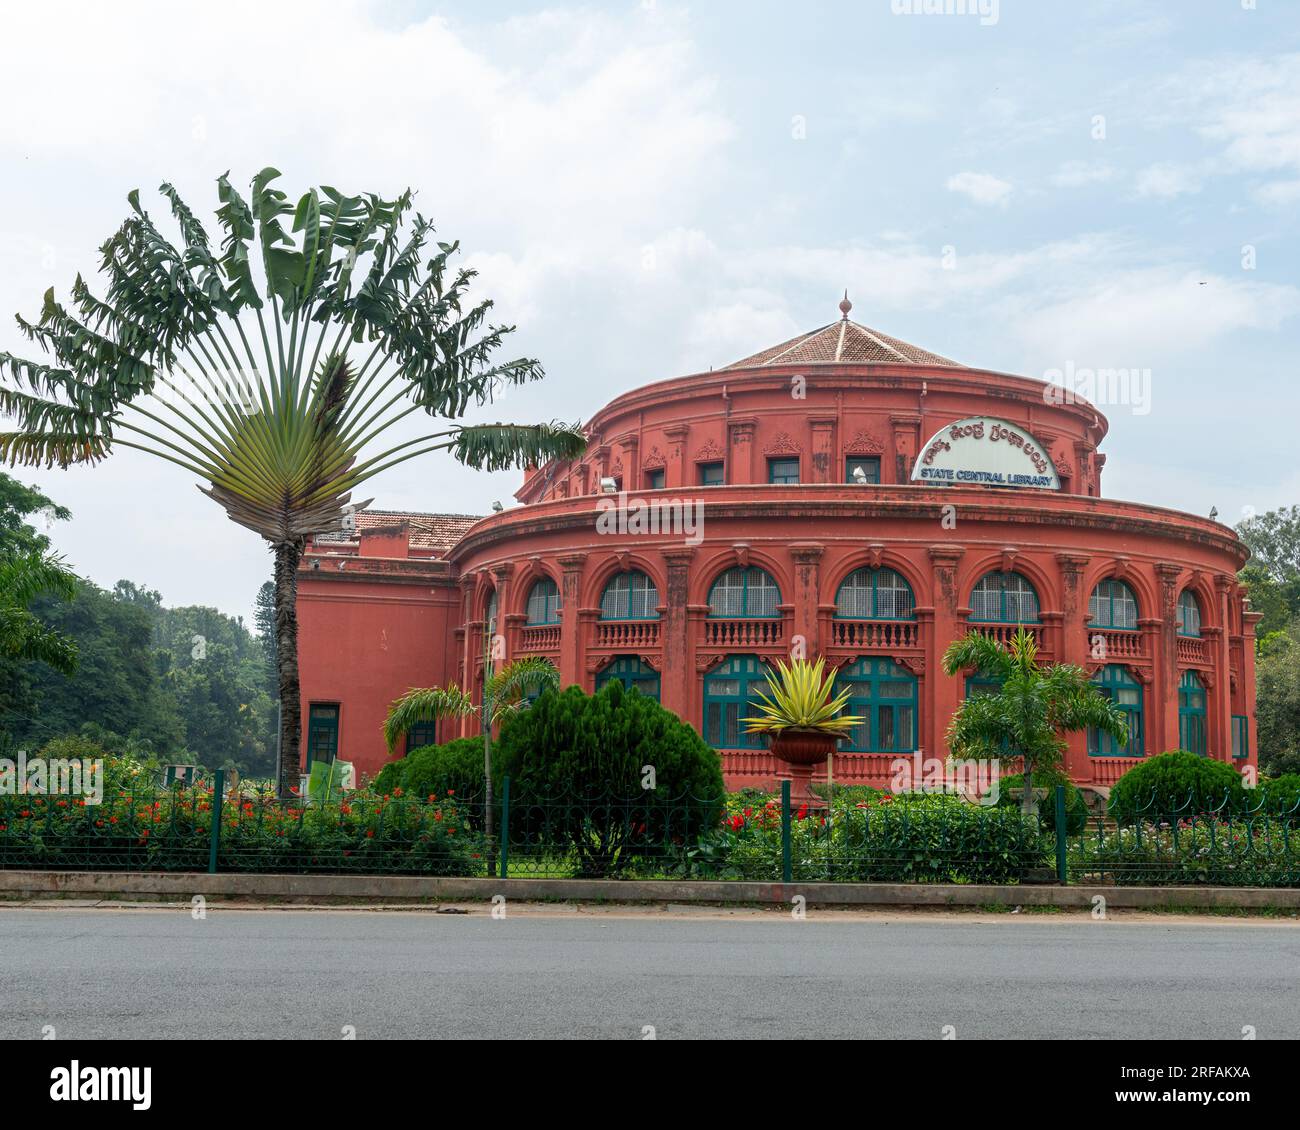 Koloniale rote Gebäude in Bangalore oder Bengaluru, der IT-Hauptstadt Indiens Stockfoto